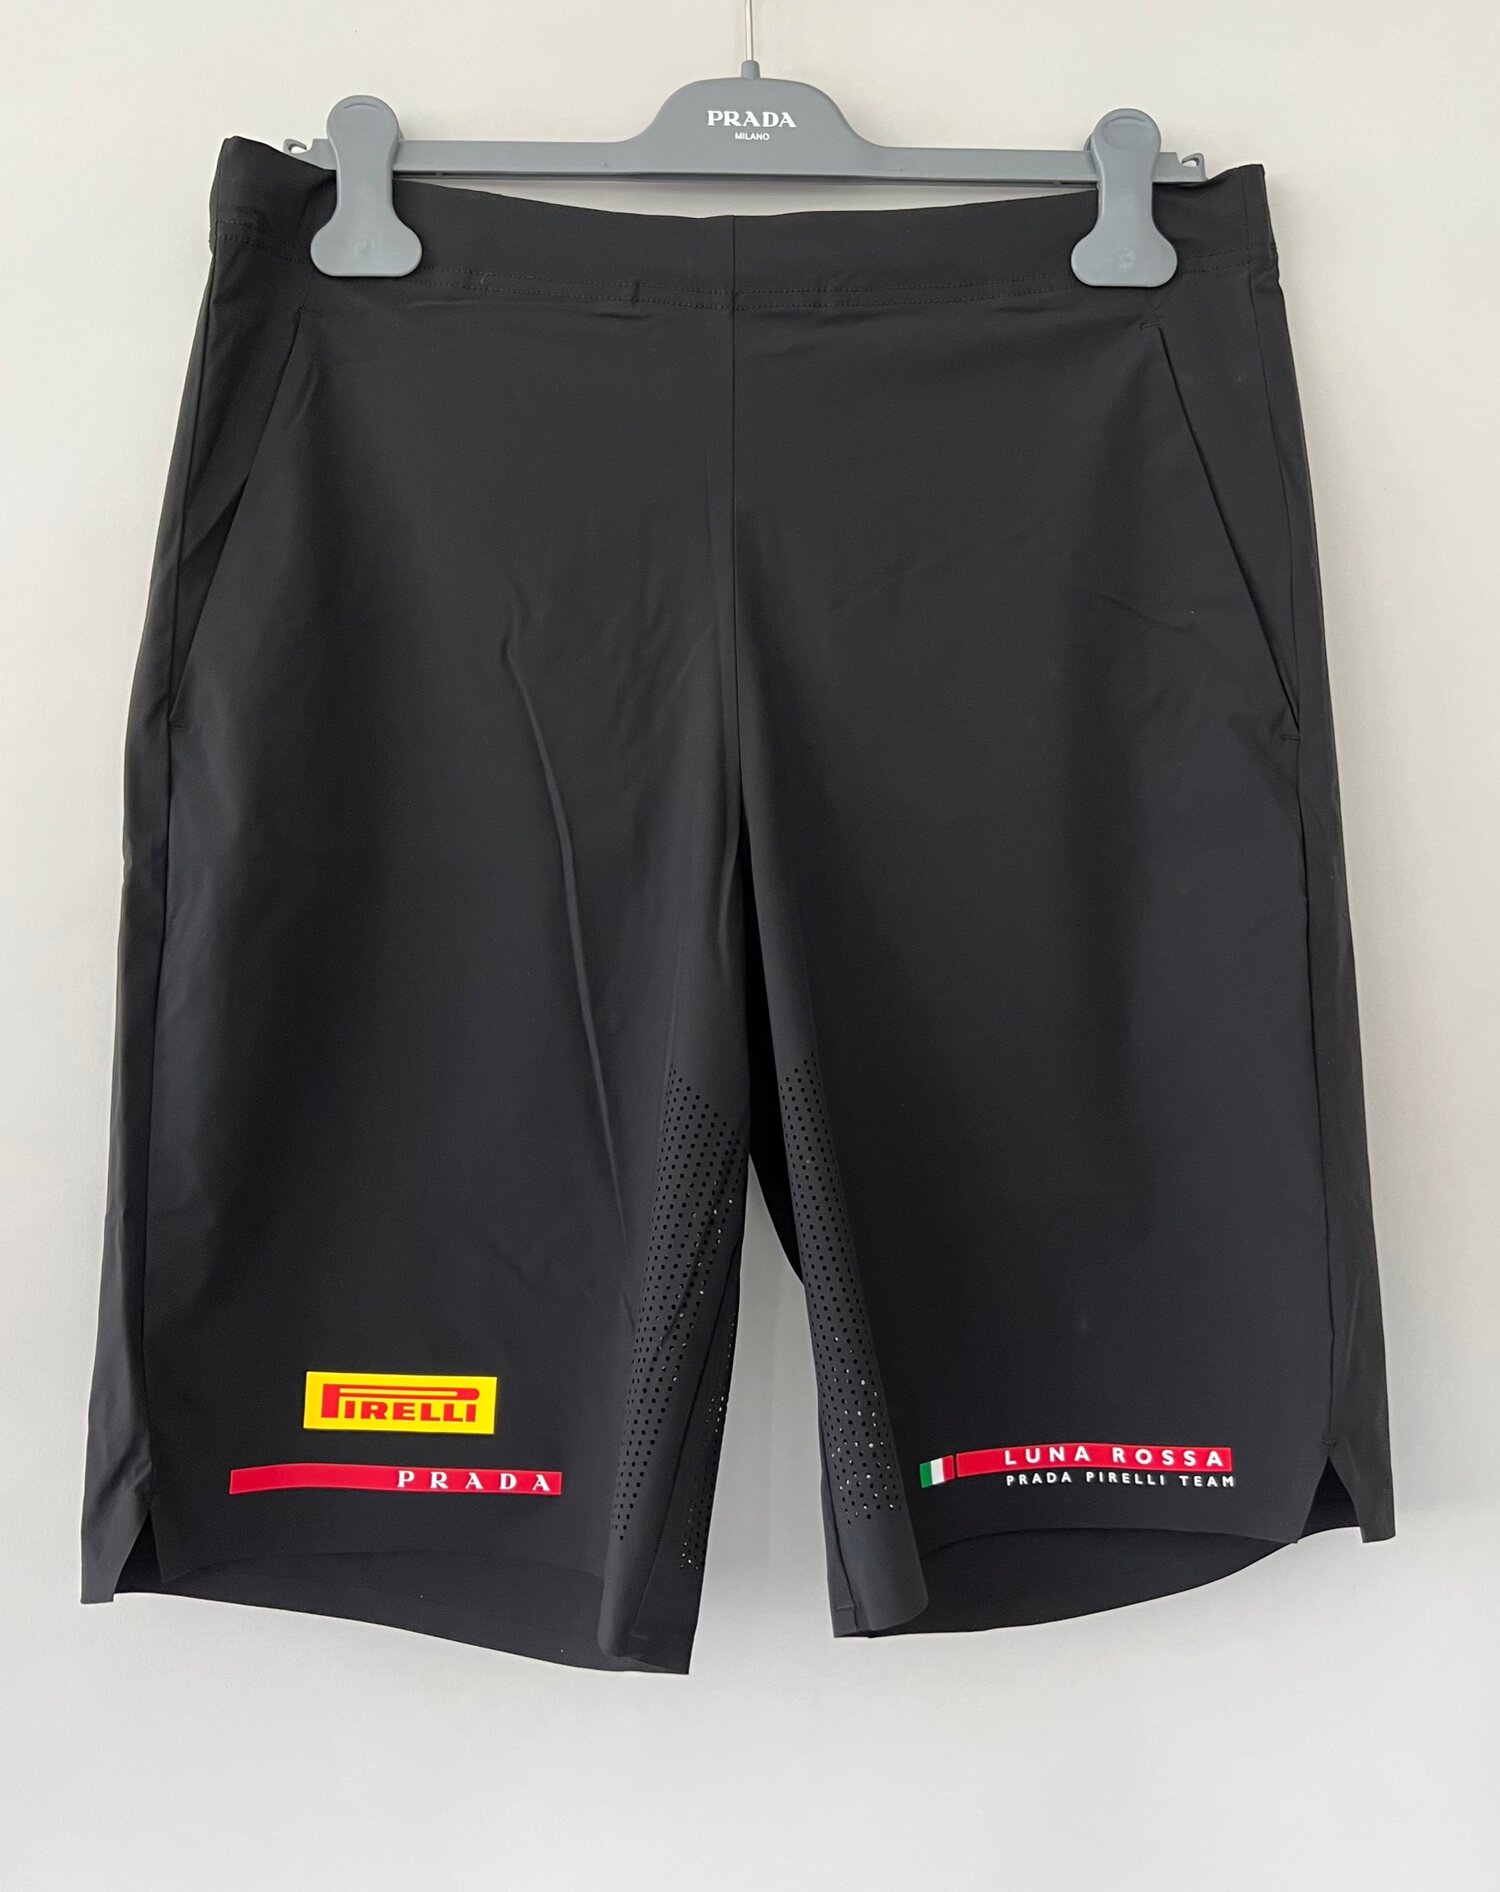 Prada Luna Rossa Pirelli Edition Sport Shorts — CONSUMED